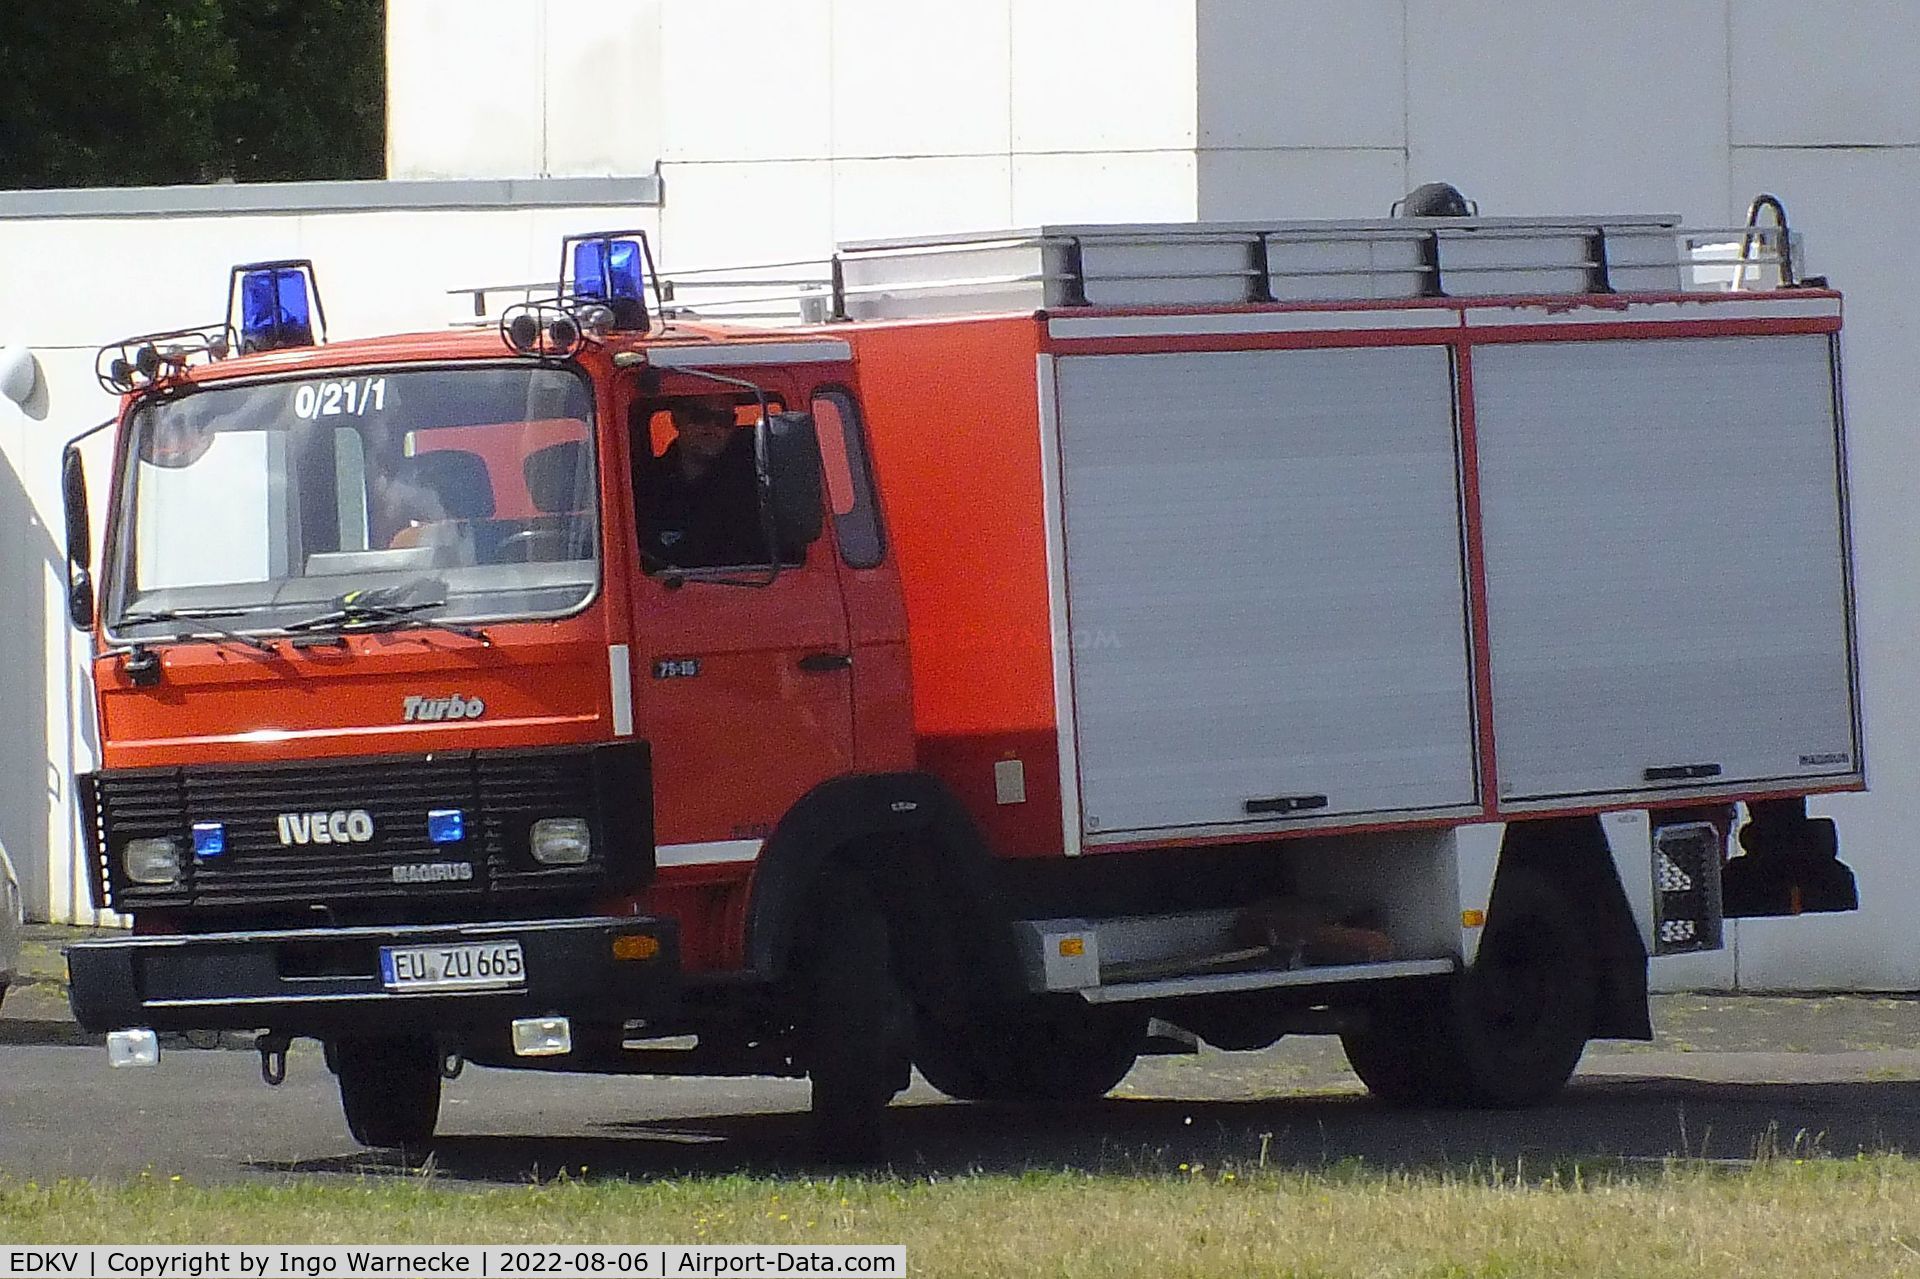 Dahlemer Binz Airport, Dahlem Germany (EDKV) - airfield fire truck at Dahlemer Binz airfield